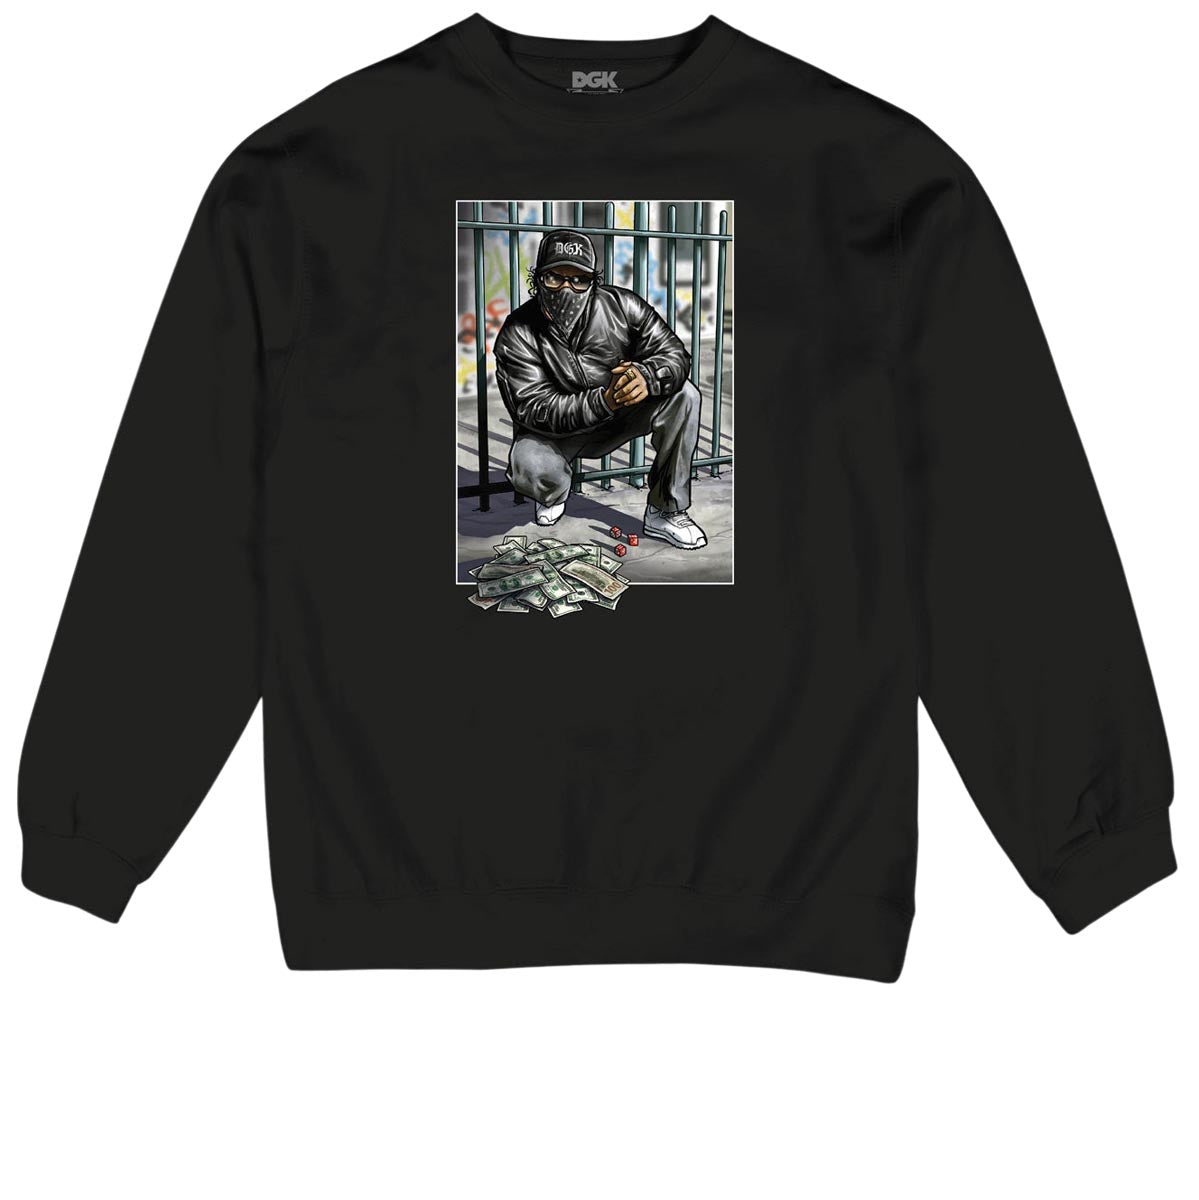 DGK 4-5-6 Crewneck Sweatshirt - Black image 1